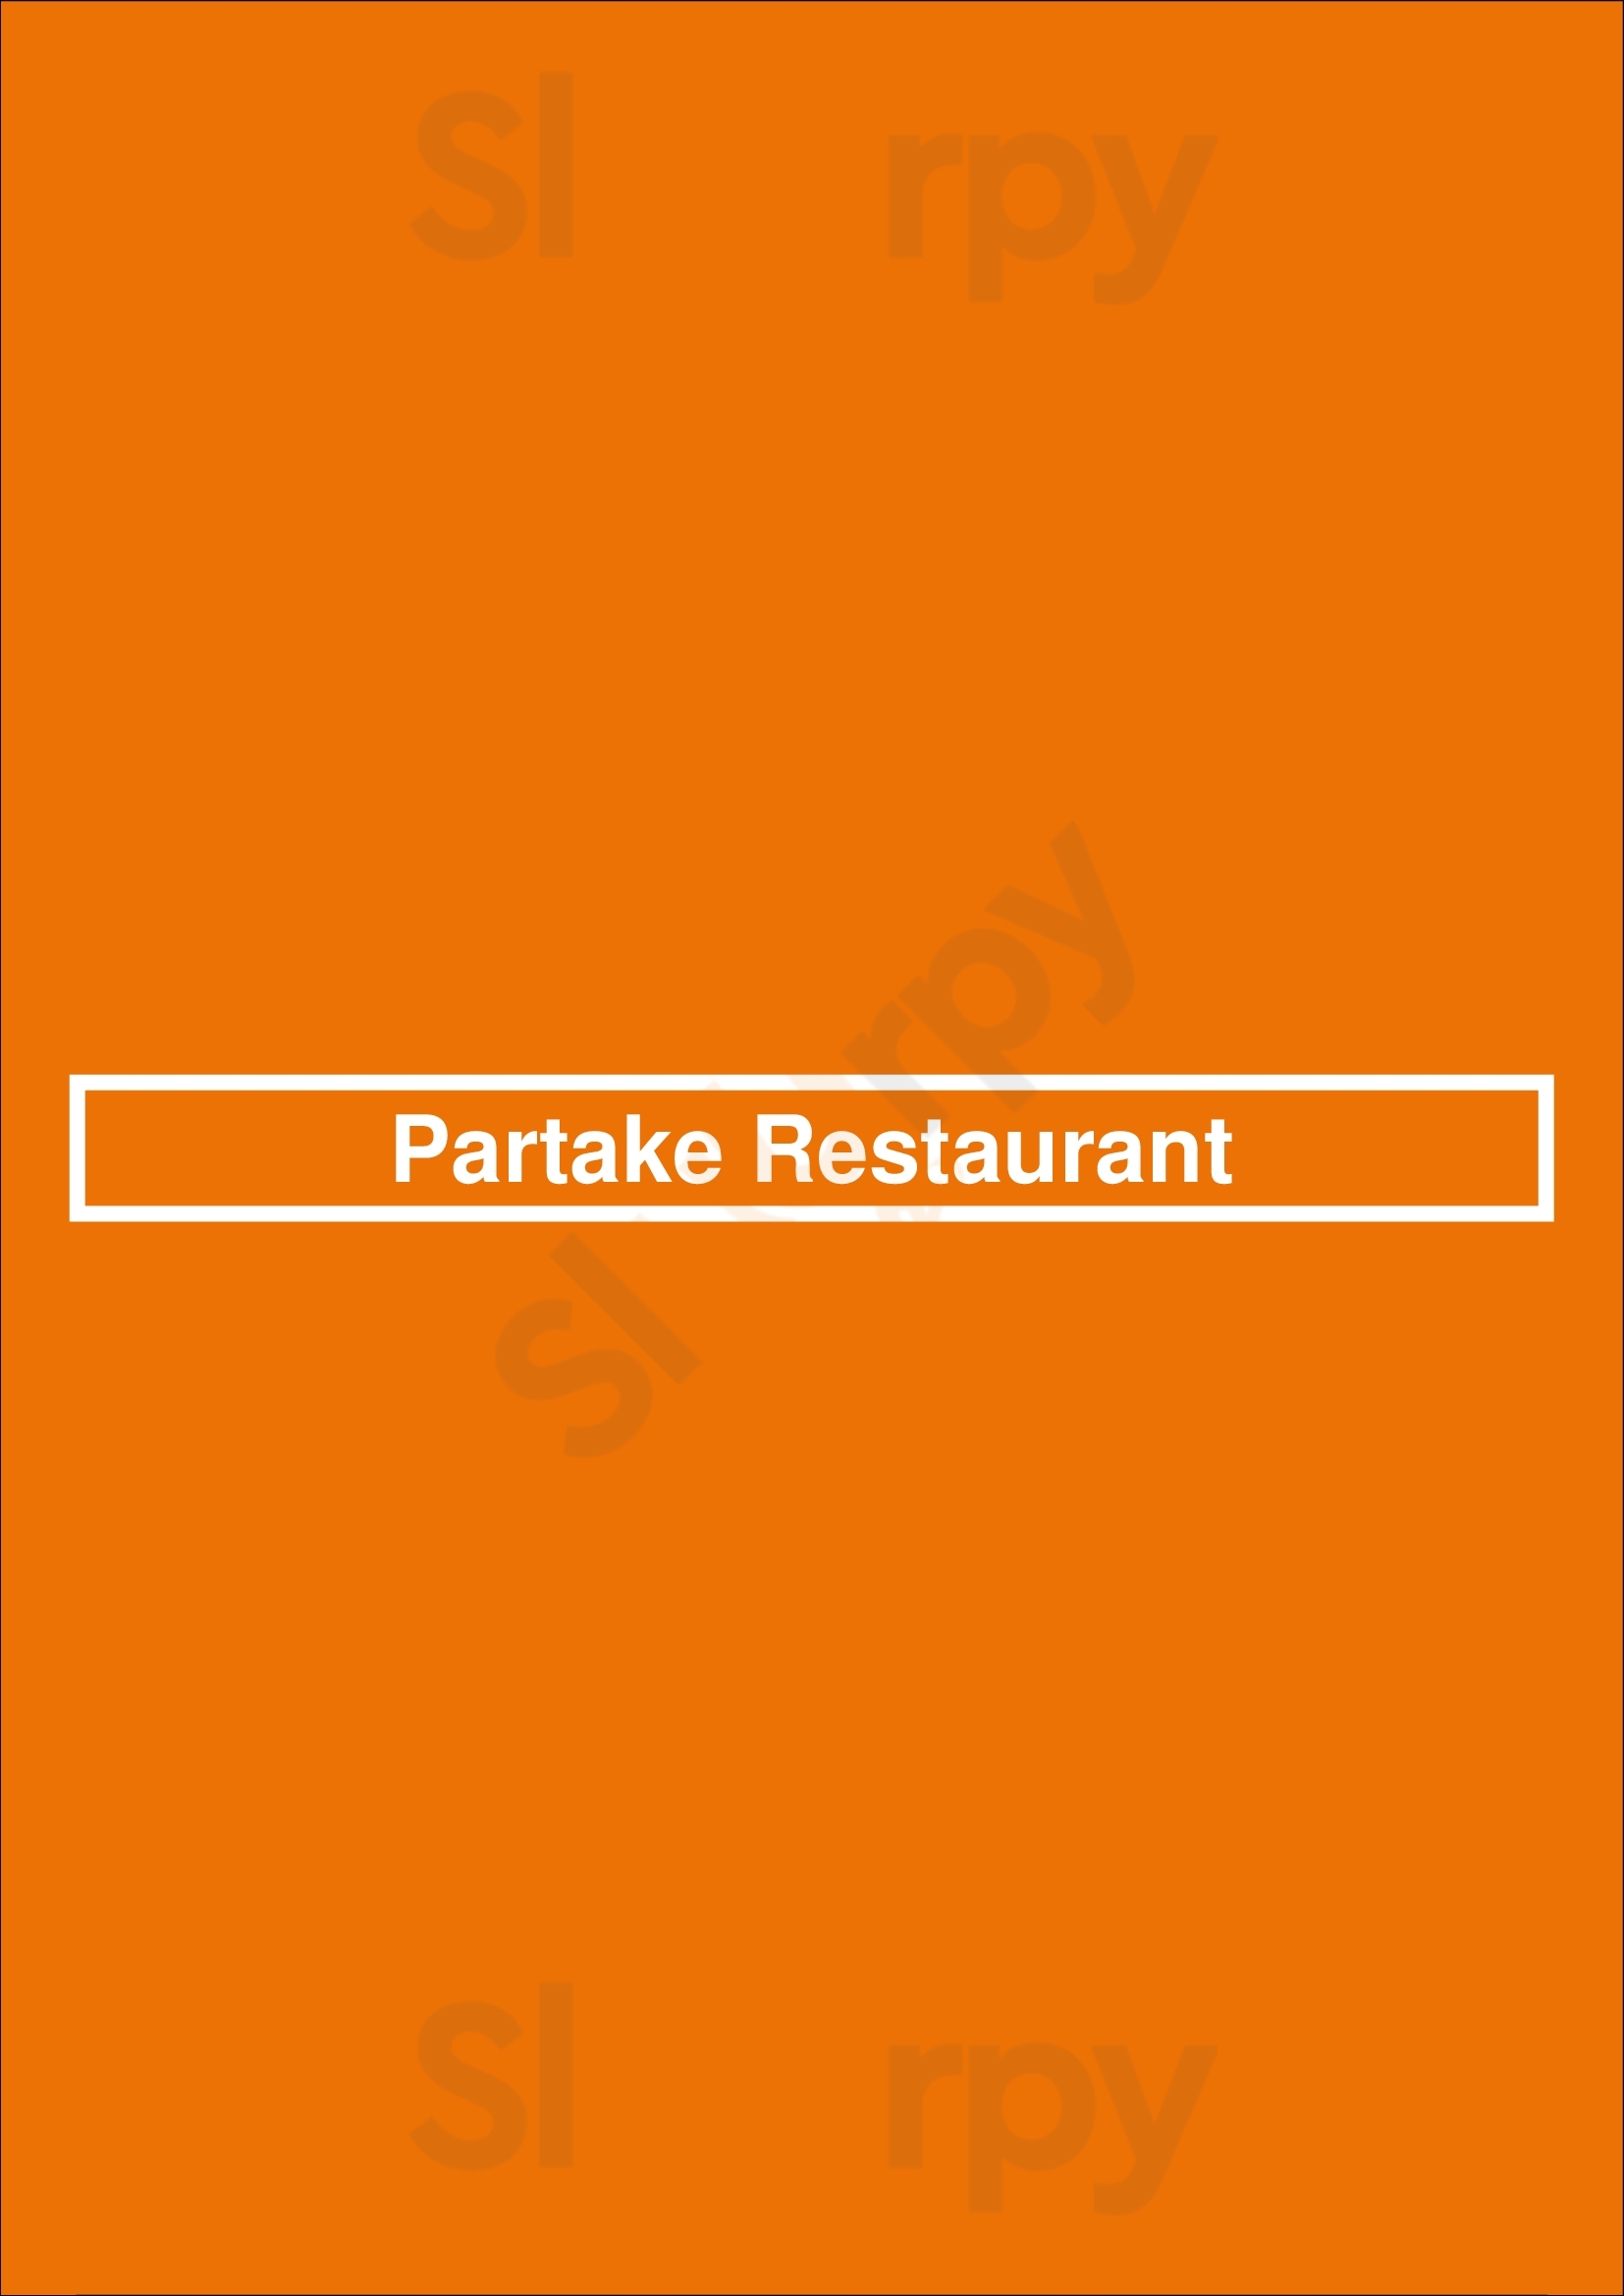 Partake Restaurant Ringwood Menu - 1